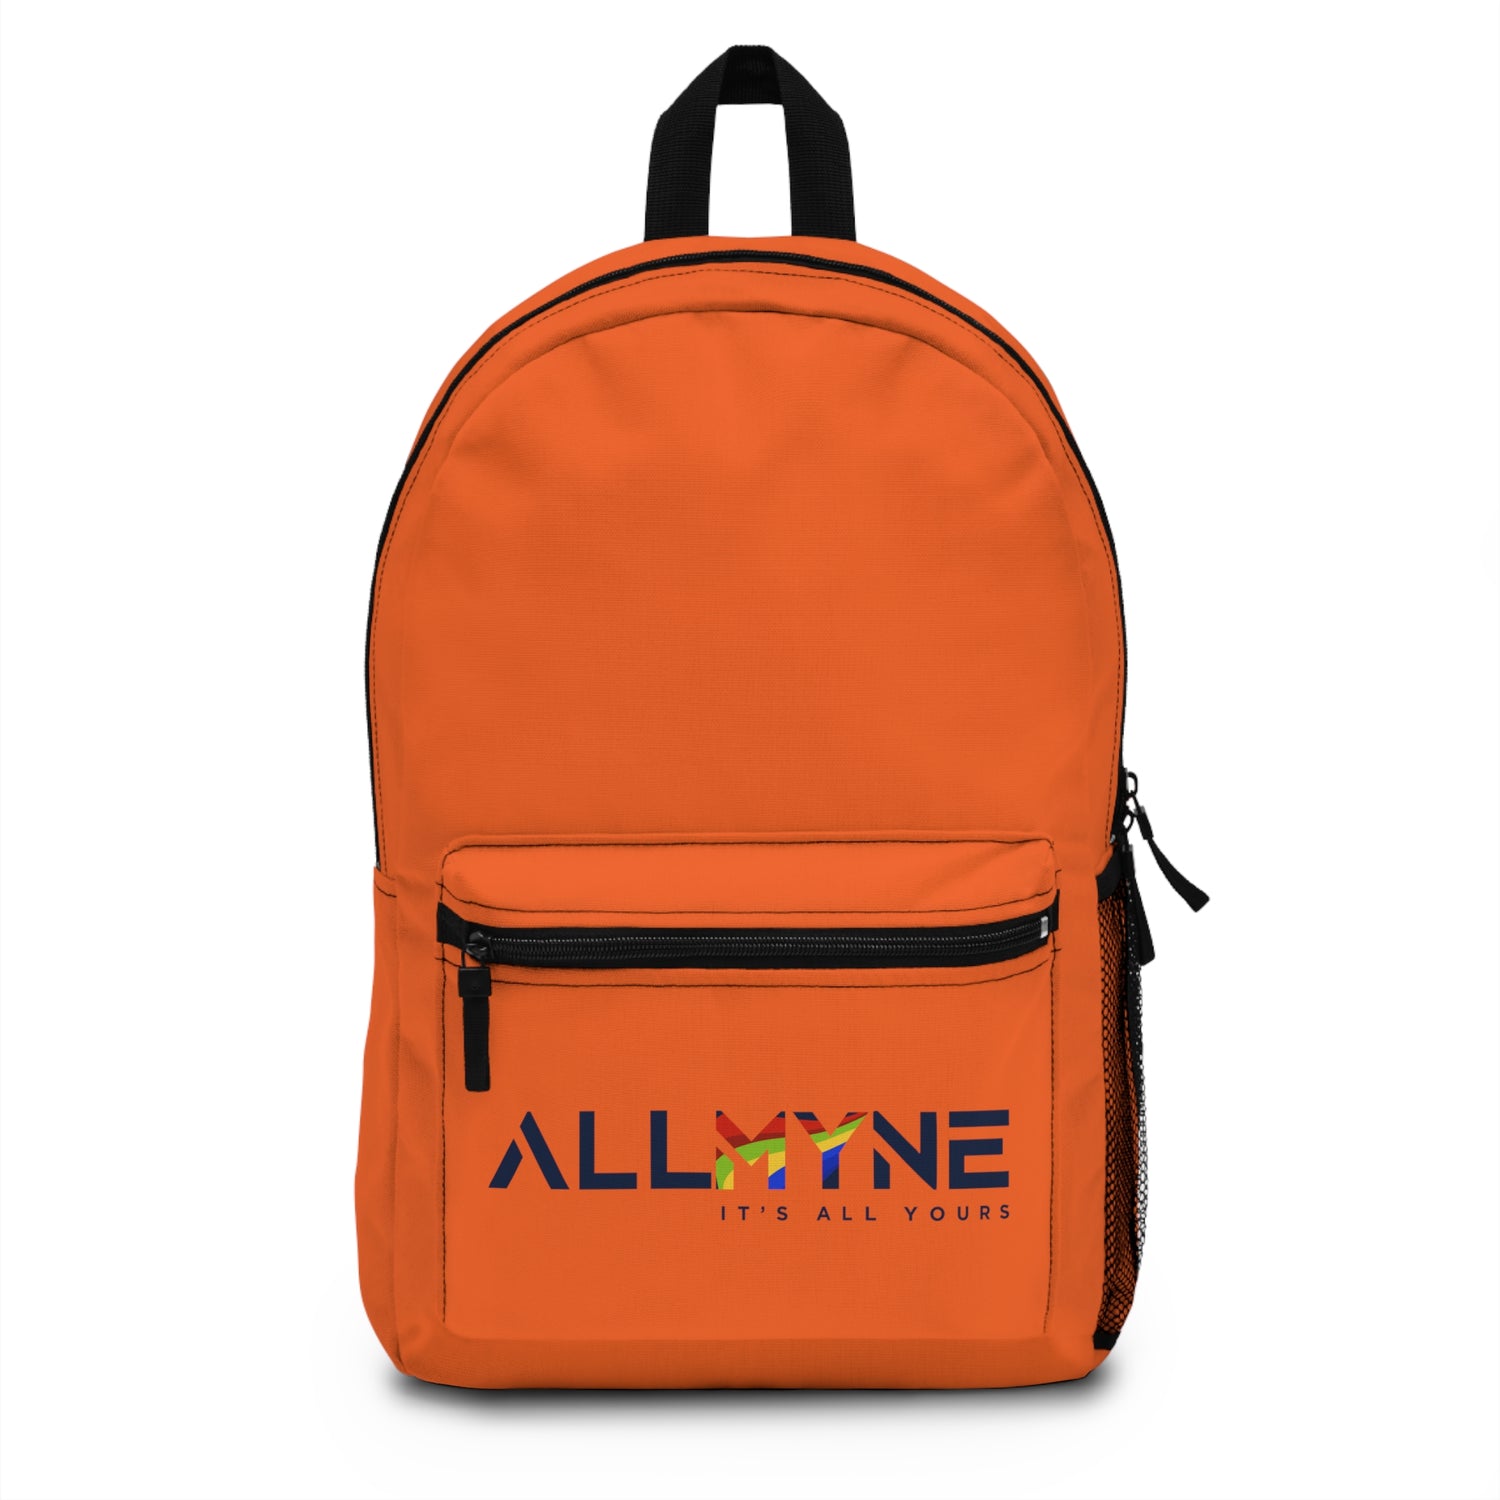 ALLMYNE Backpack (Orange)